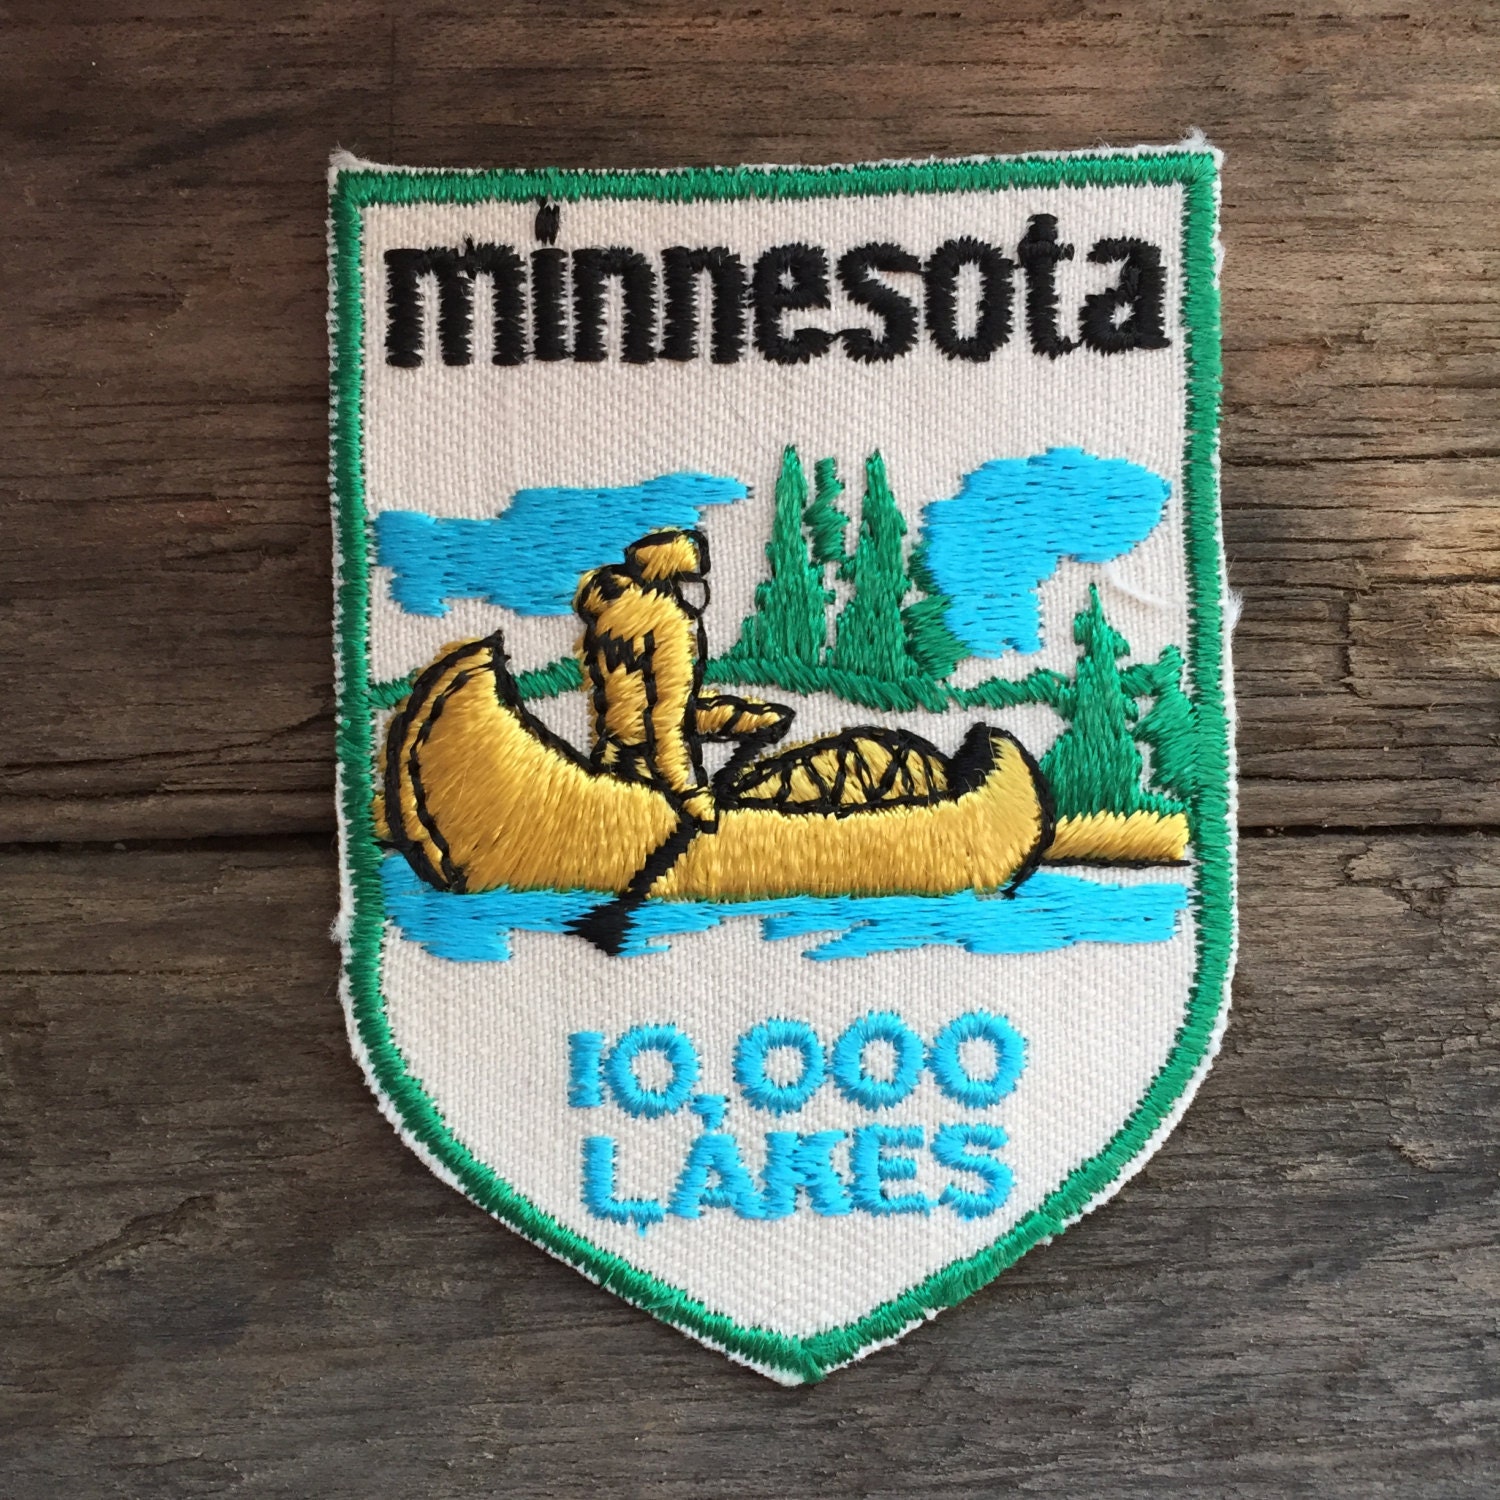 Free Shipping! Brand New Minnesota 10,000 Lakes Travel Souvenir Patch 